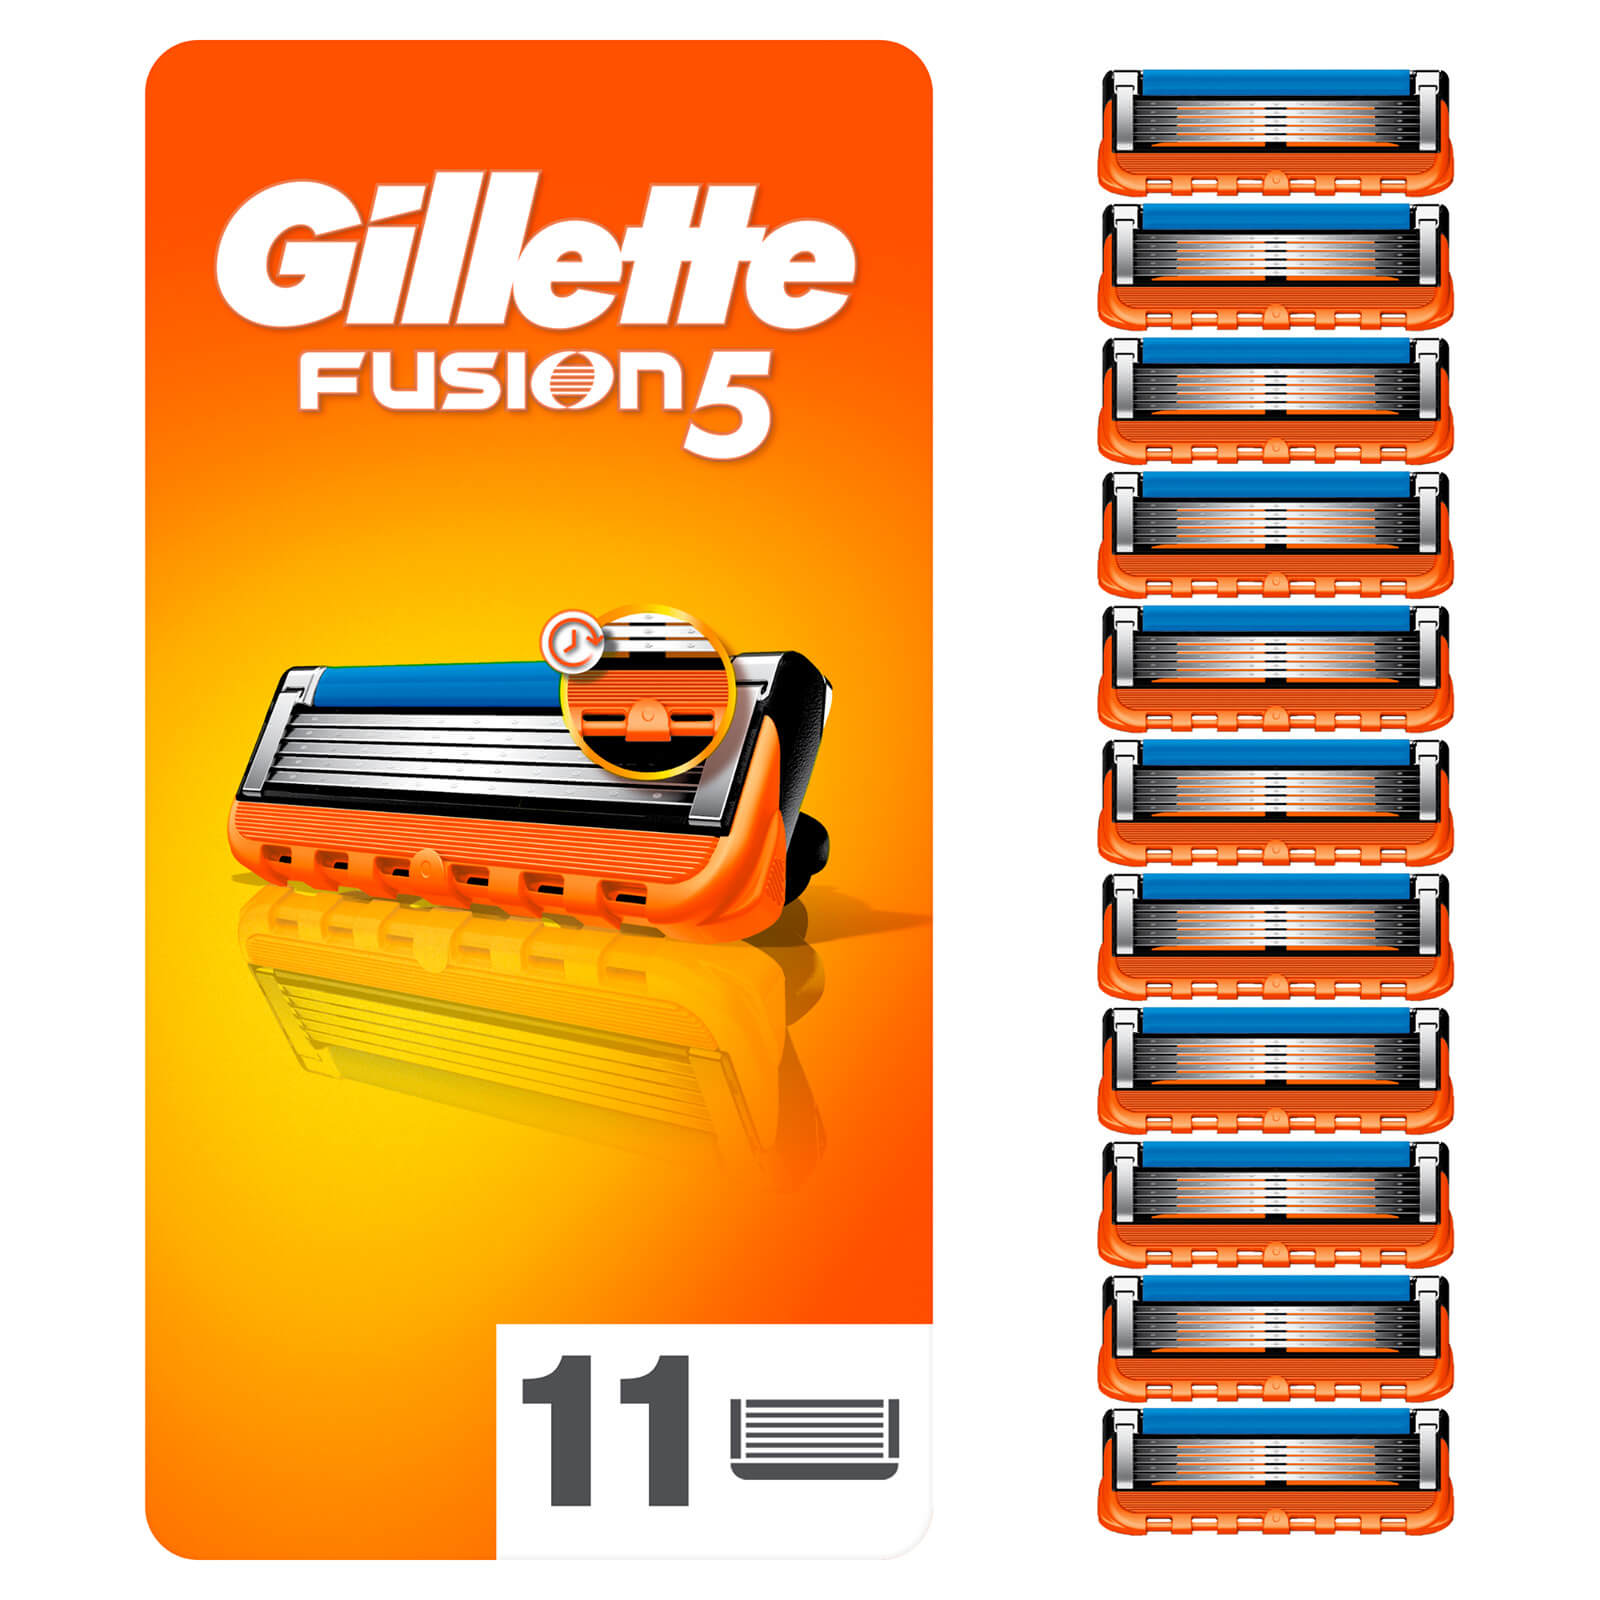 Gillette Fusion5 Razor Blades - 11 Pack